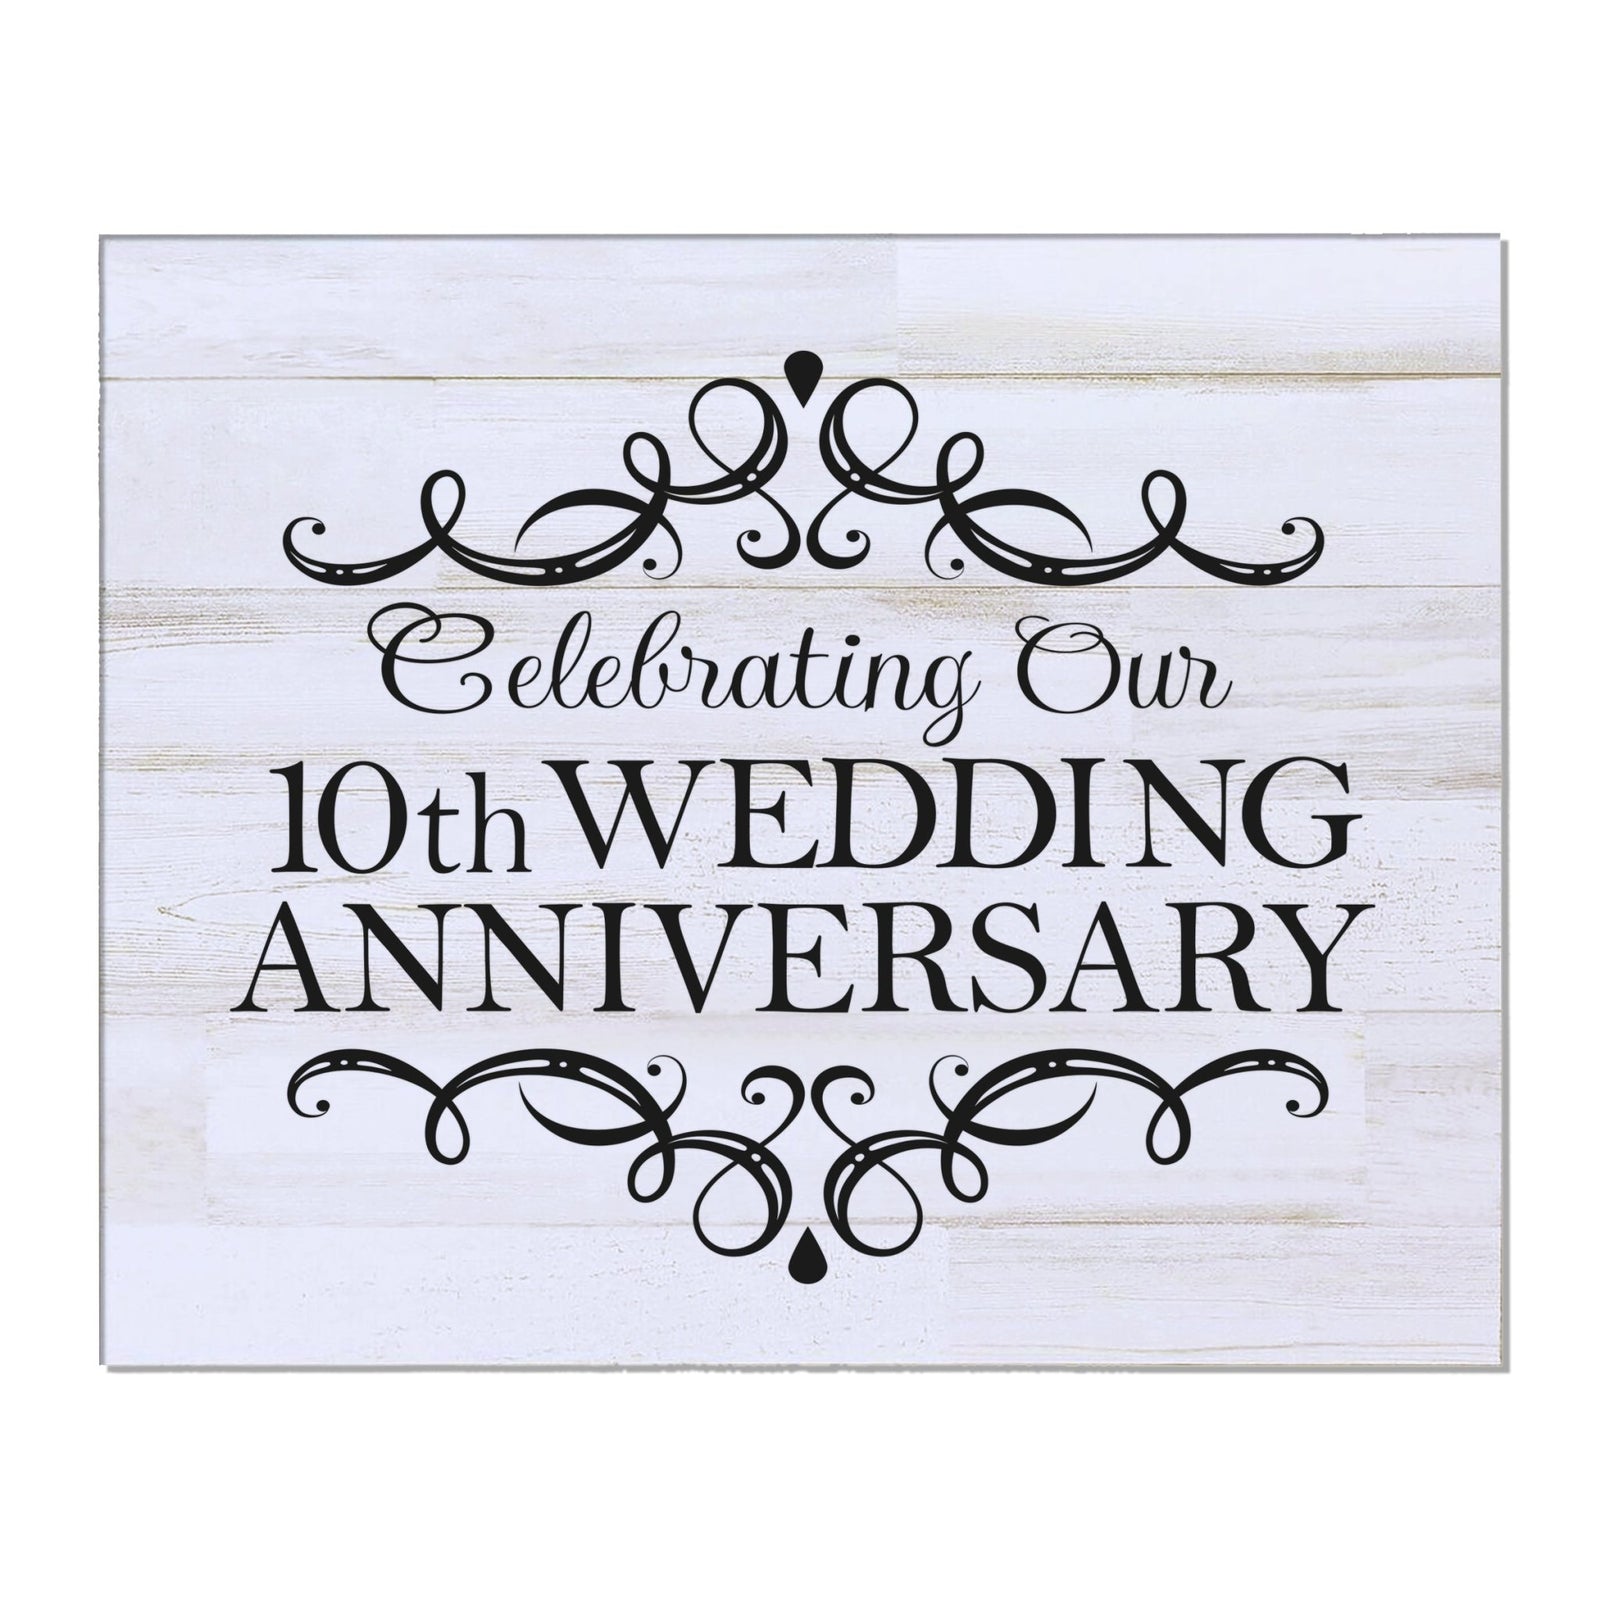 10th Wedding Anniversary Wall Plaque - Celebrating - LifeSong Milestones